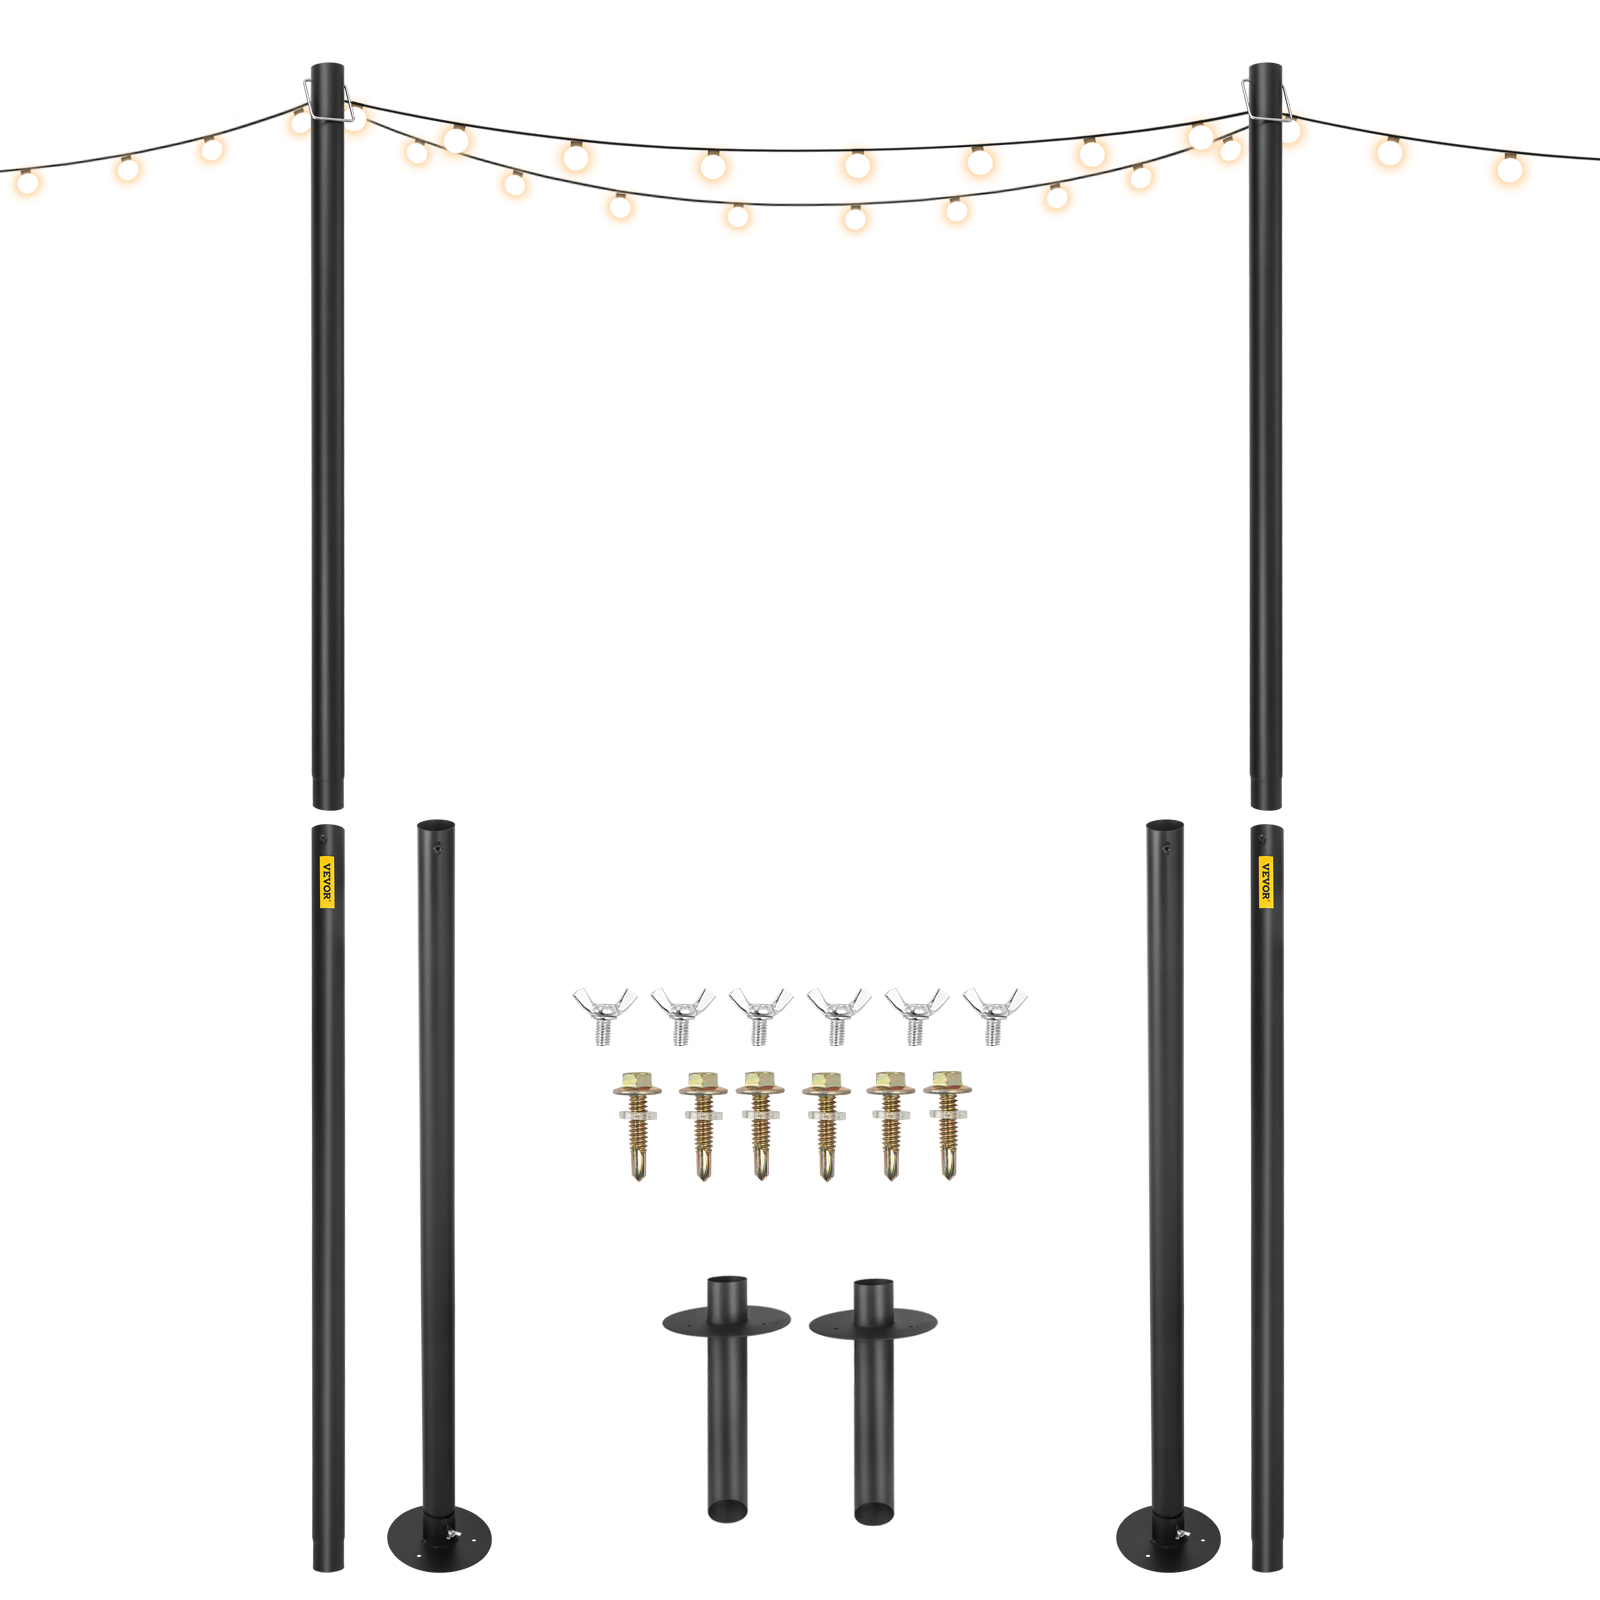 VEVOR String Light Poles Outdoor Metal Pole 10.6FT 2PCS Steel for Patio Backyard от Vevor Many GEOs